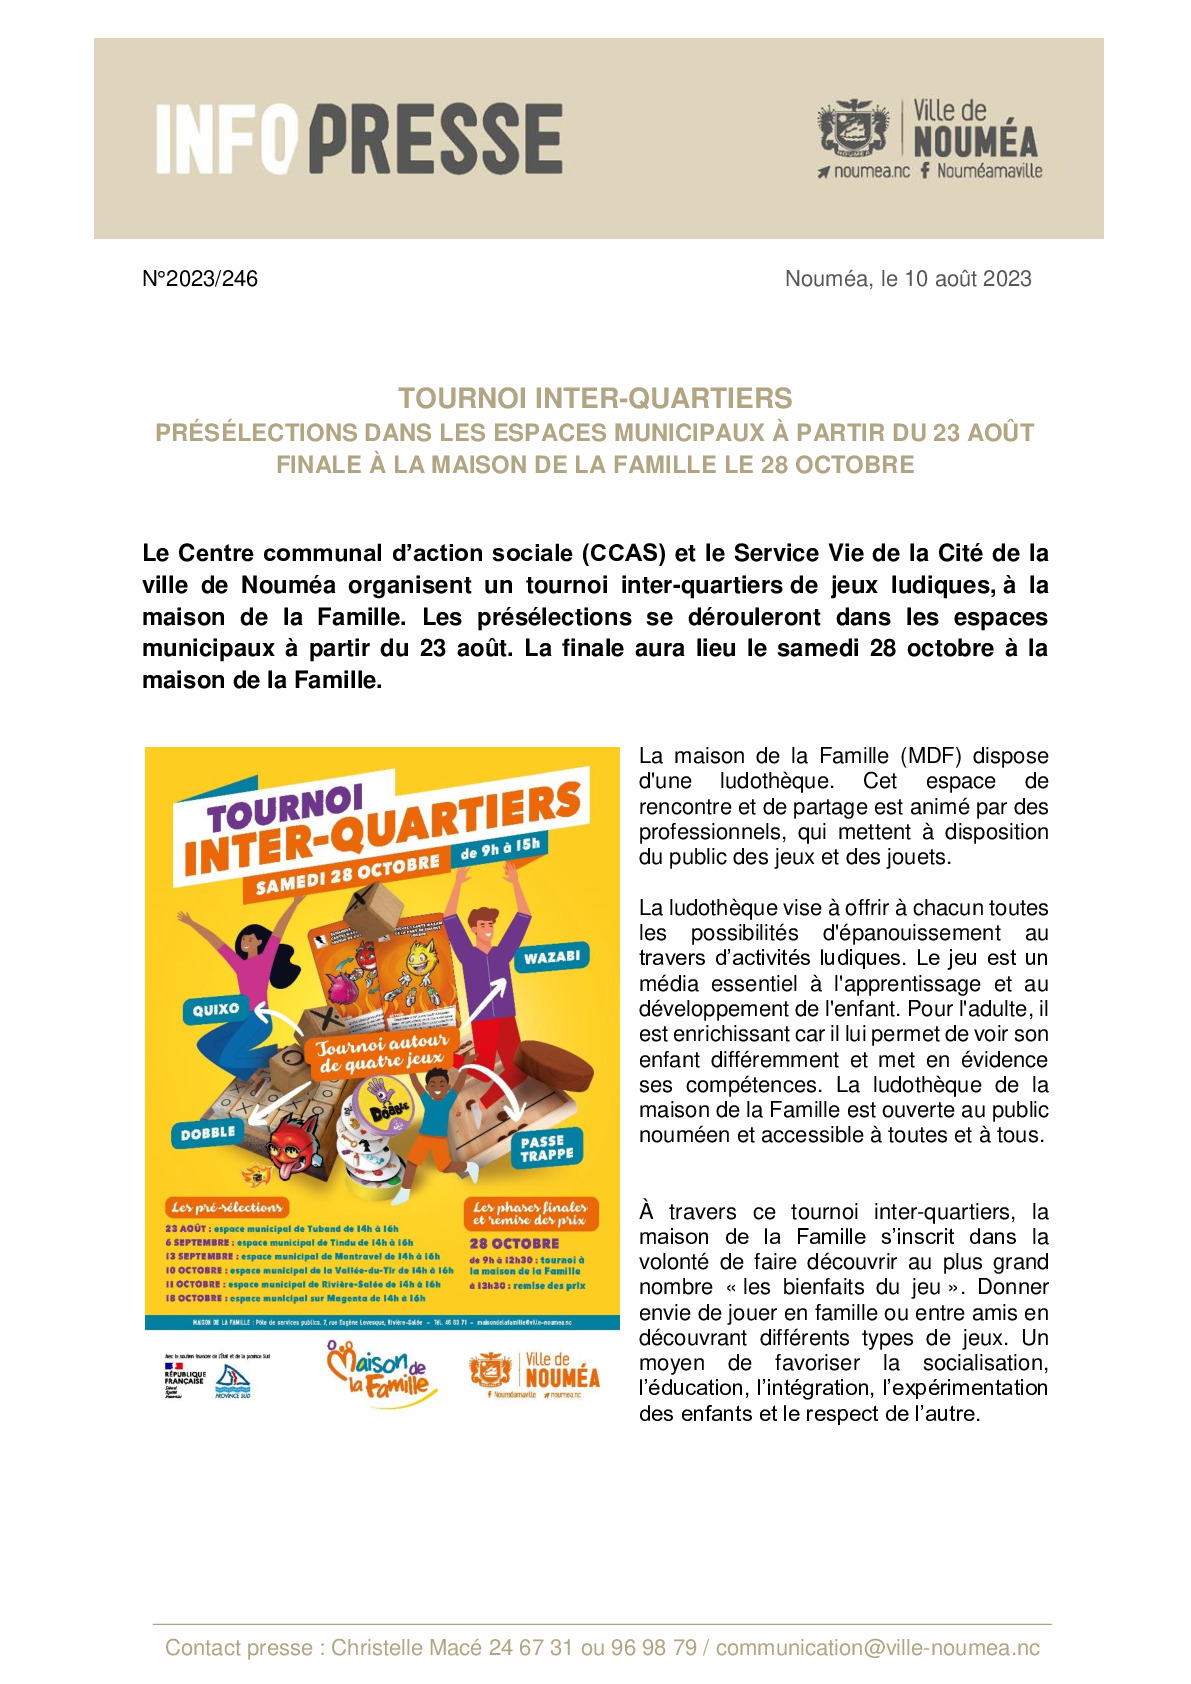 IP 246 Tournoi inter-quartiersV3.pdf